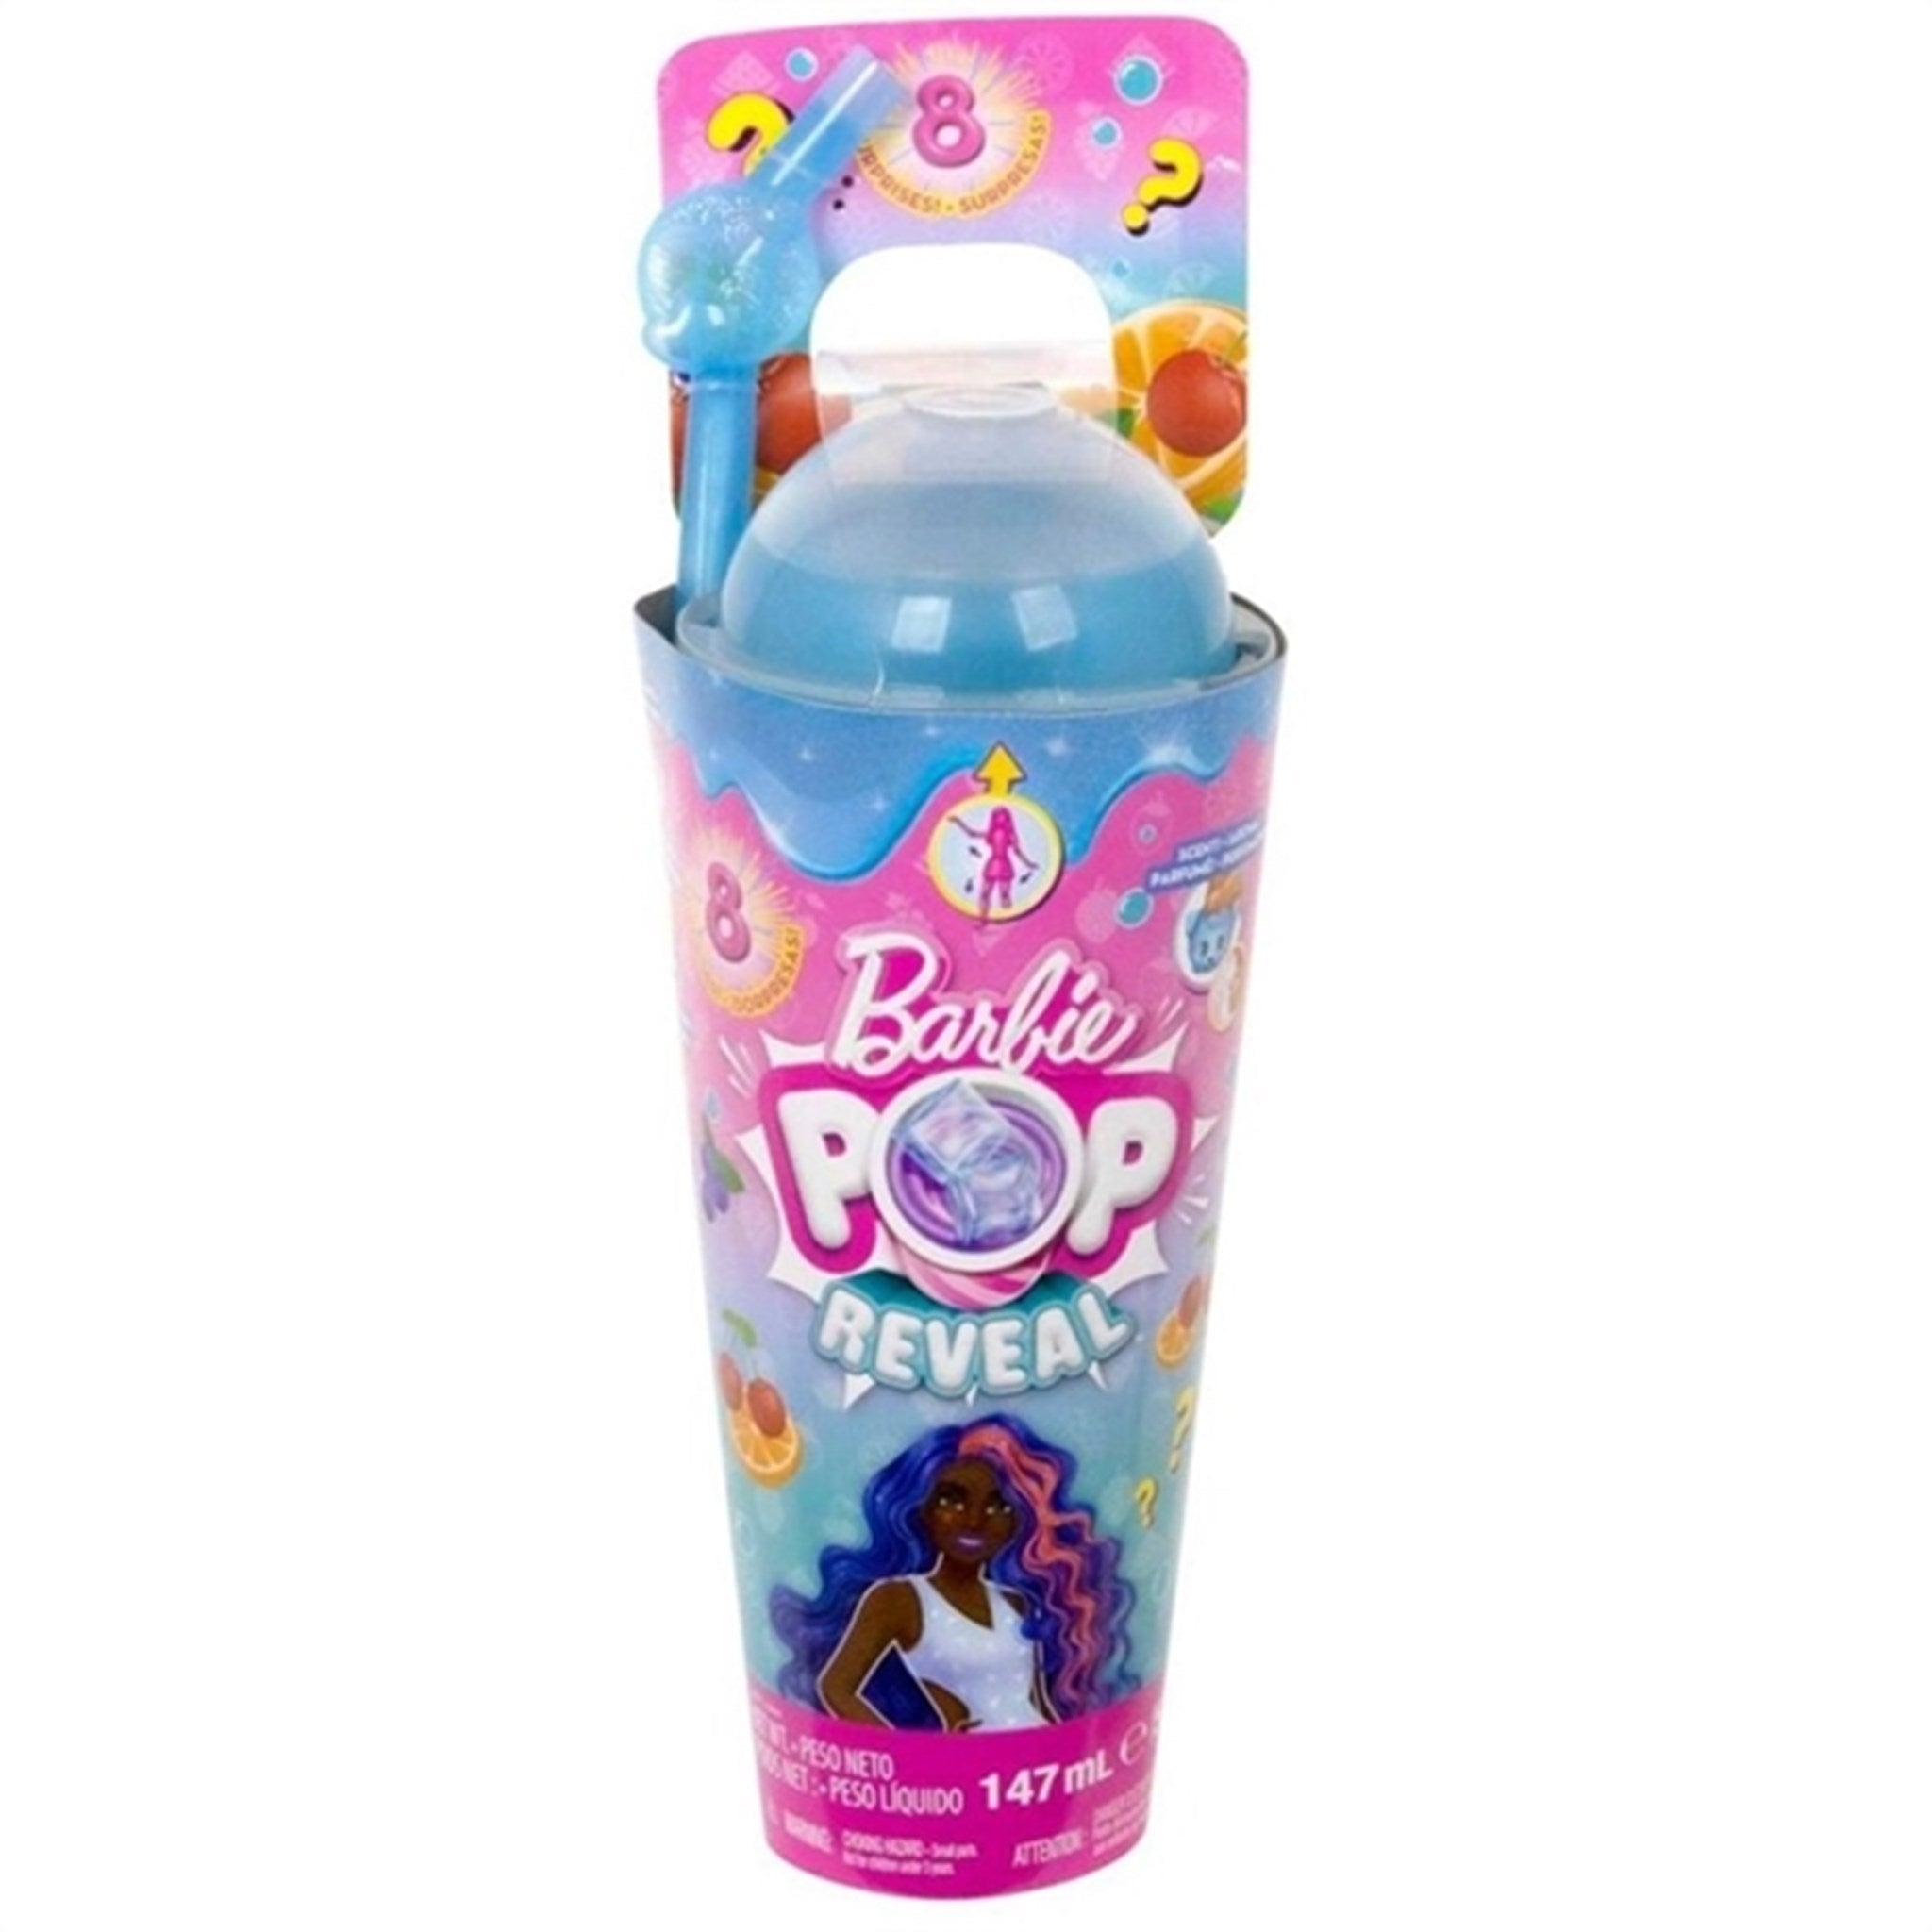 Barbie® Pop Reveal Juicy Fruit Punch